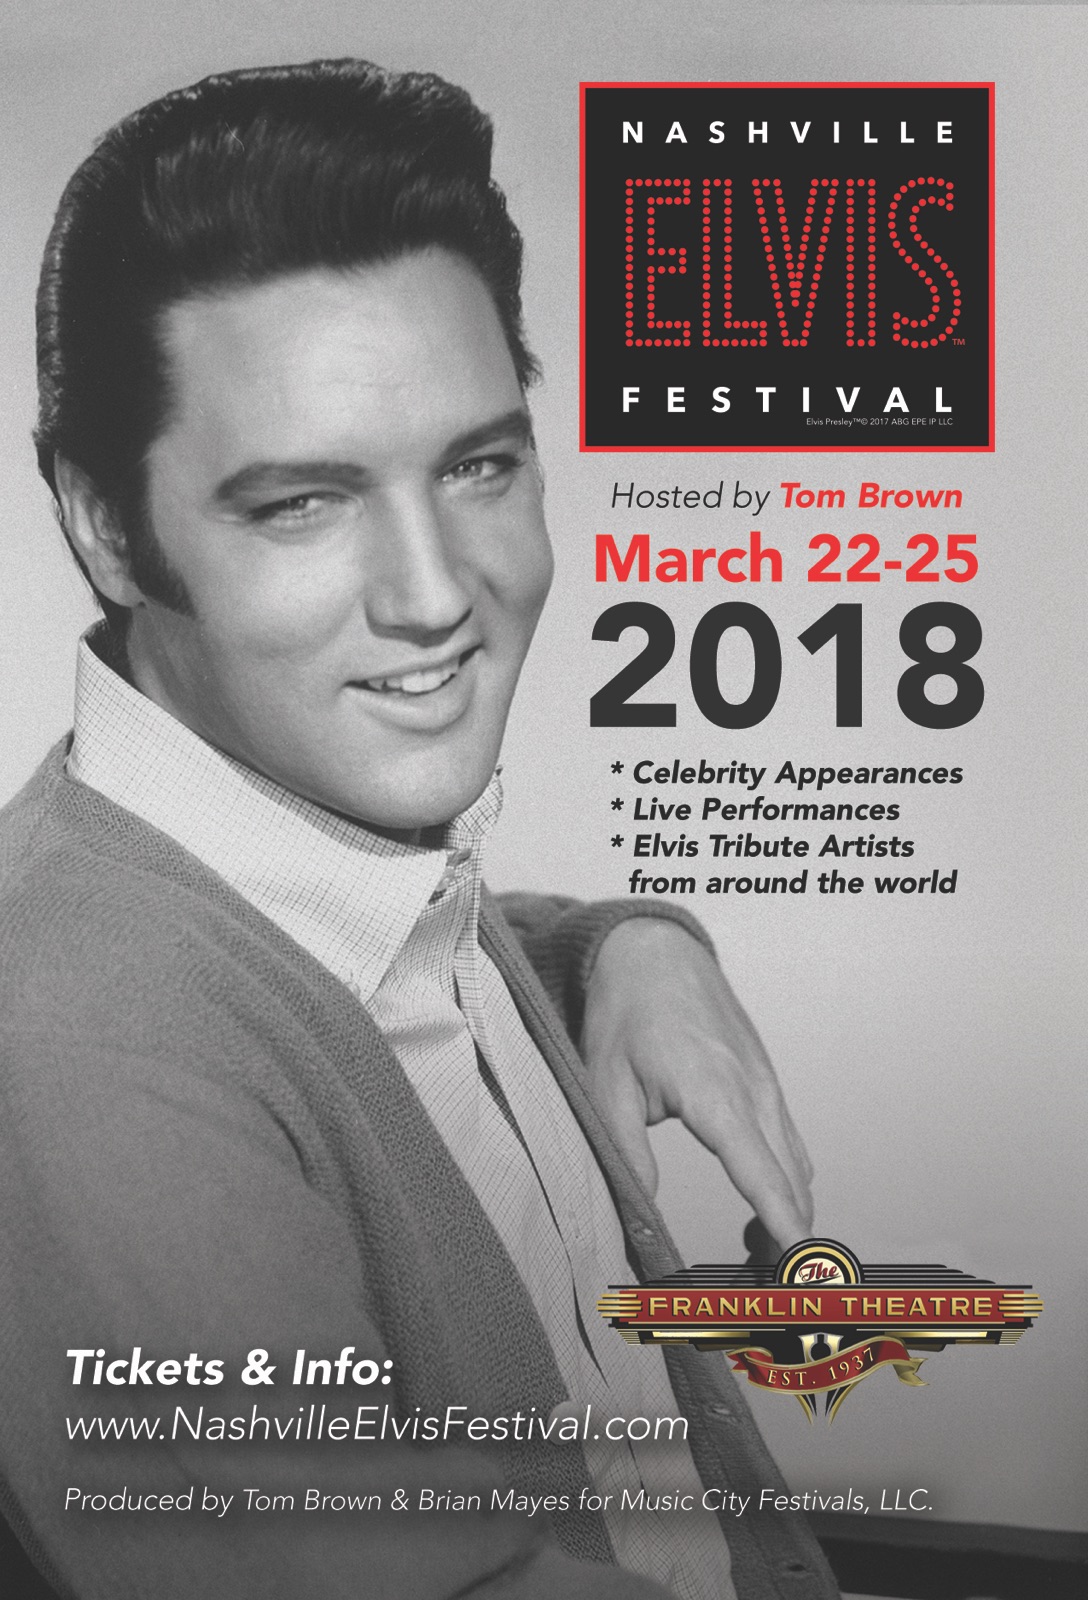 Nashville Elvis Festival - March 22-25, 2018